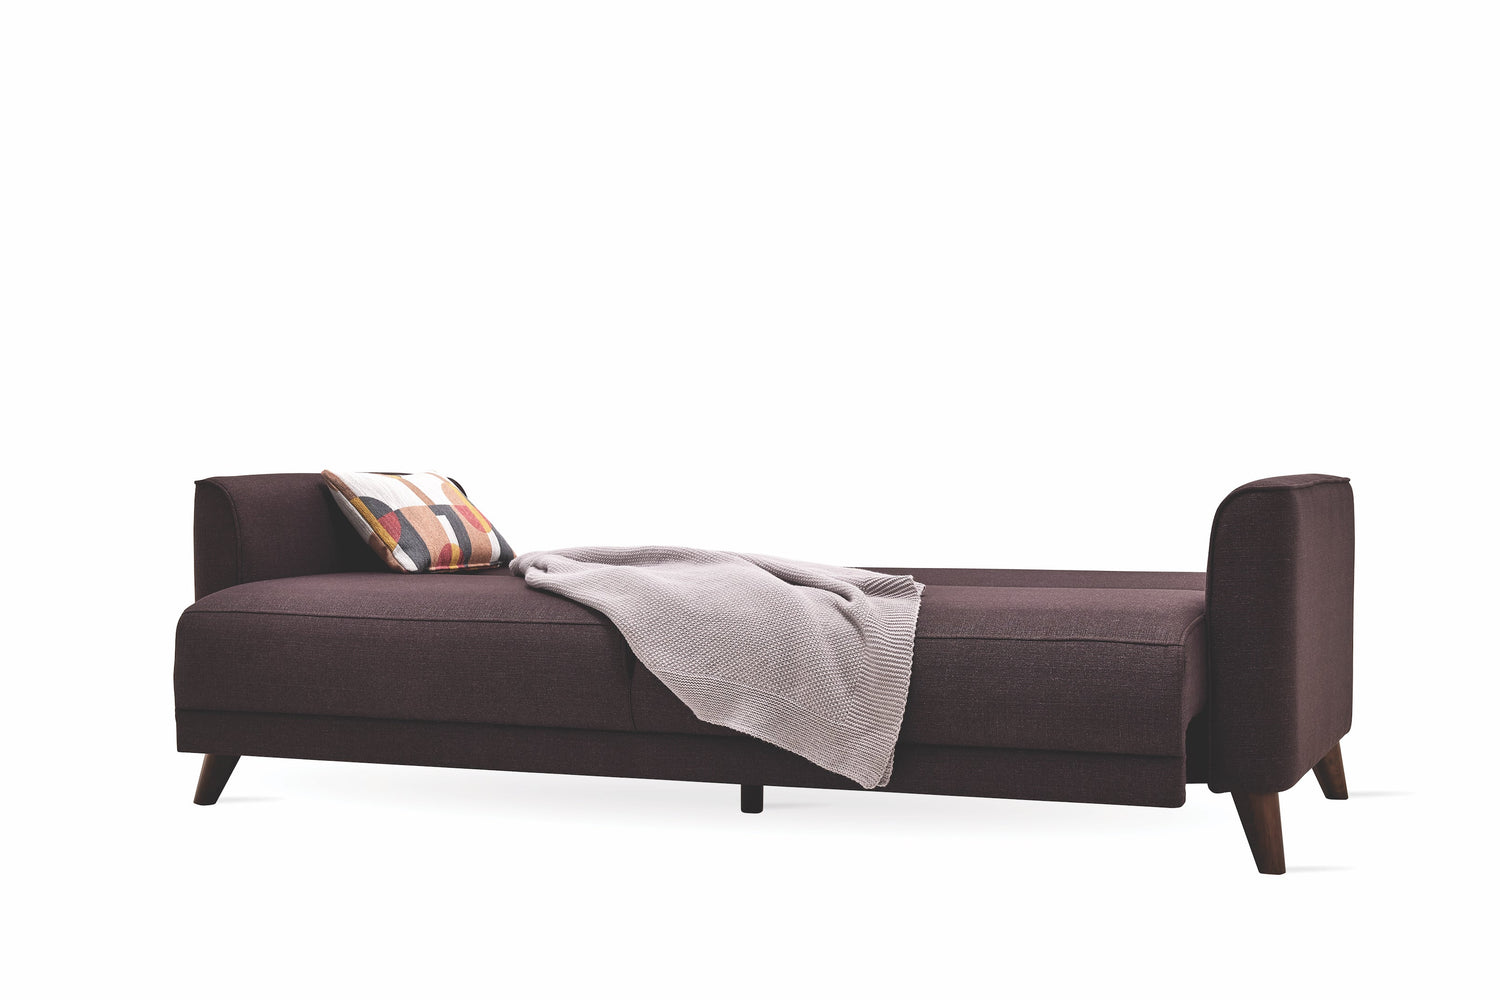 Alto Brown 3-Seater Sofa Bed with Storage - ALTO 03.302.0514.0937.0048.0000.21.17